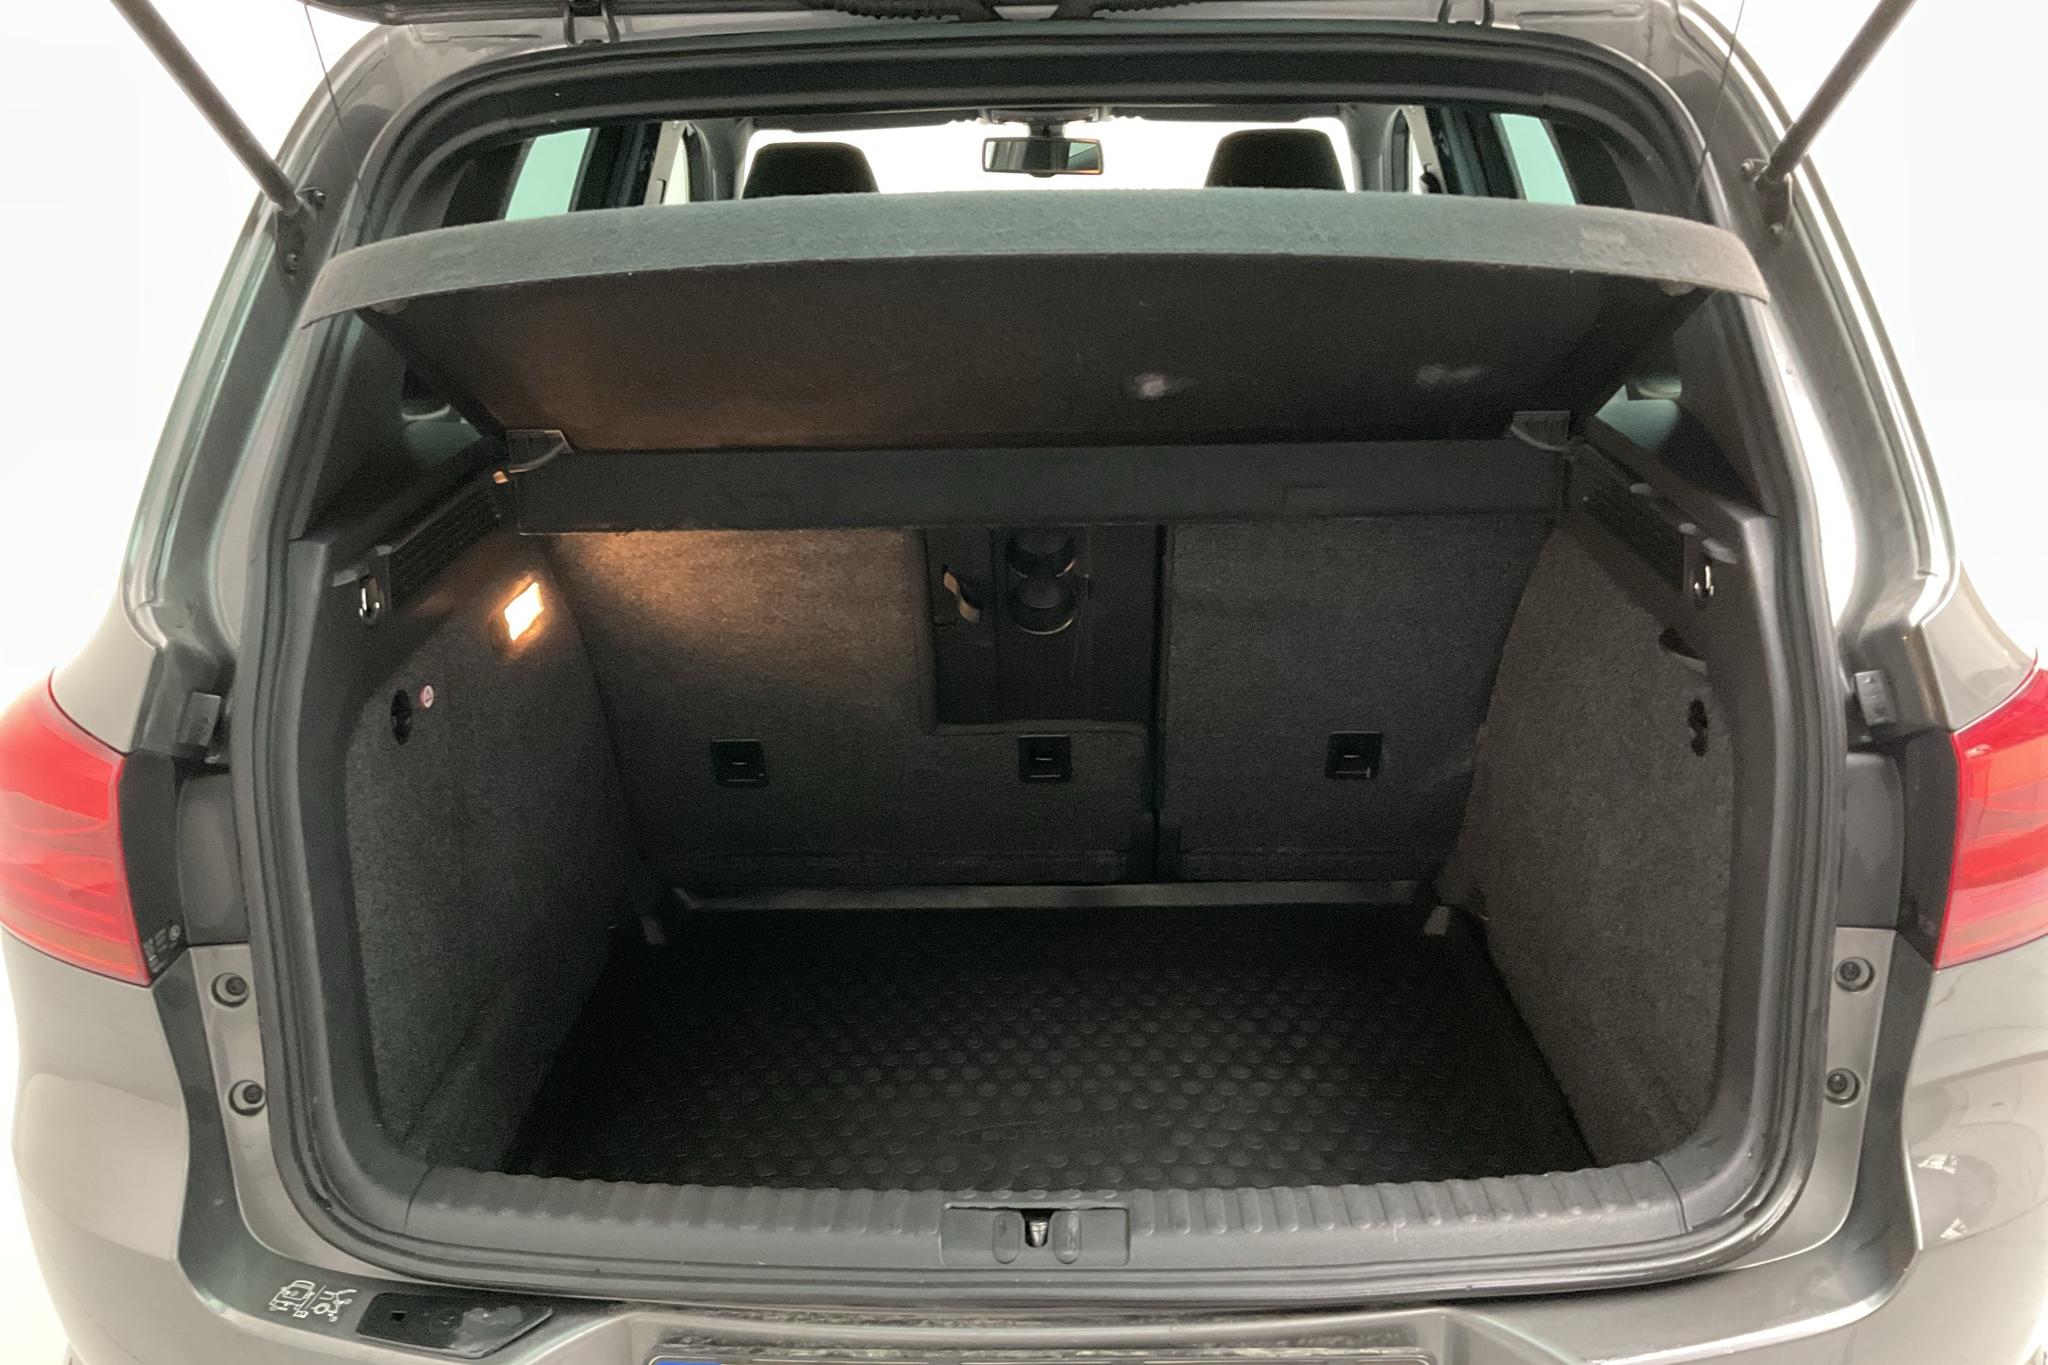 VW Tiguan 1.4 TSI 4MOTION (160hk) - 14 771 mil - Manuell - Dark Grey - 2013